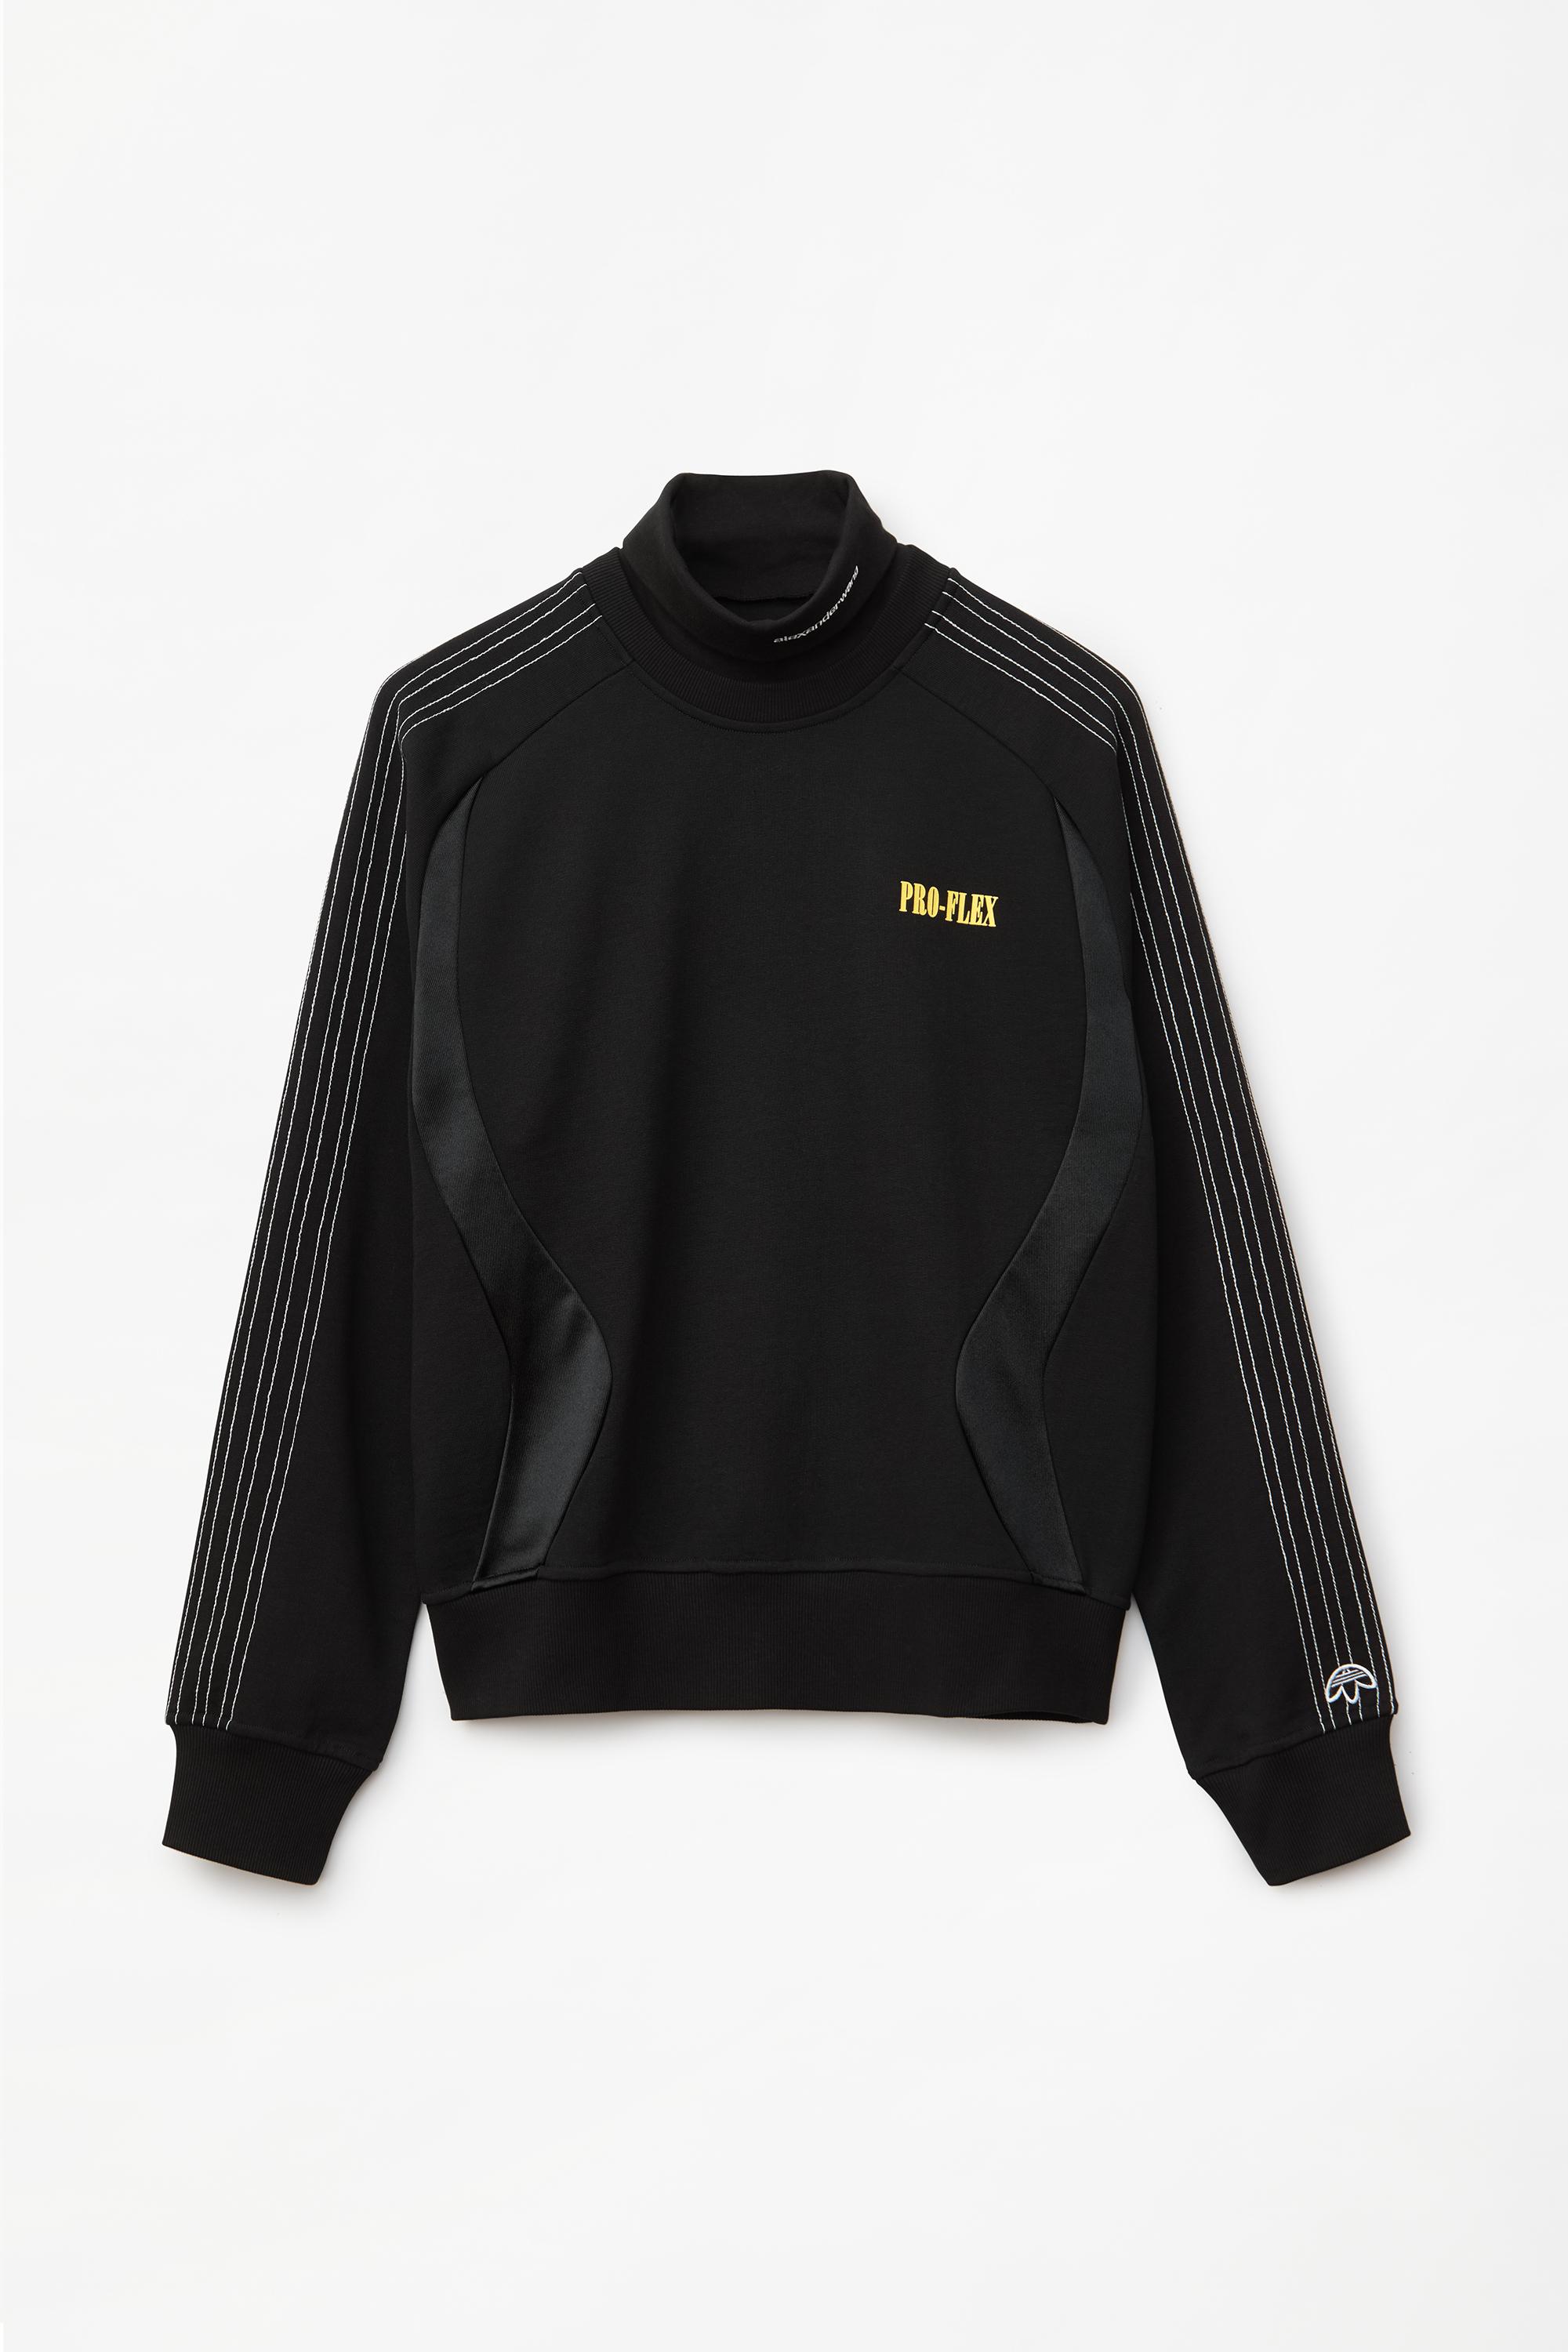 Alexander Wang Cotton Adidas Originals By Aw Wangbody Sweatshirt in Black  for Men | Lyst